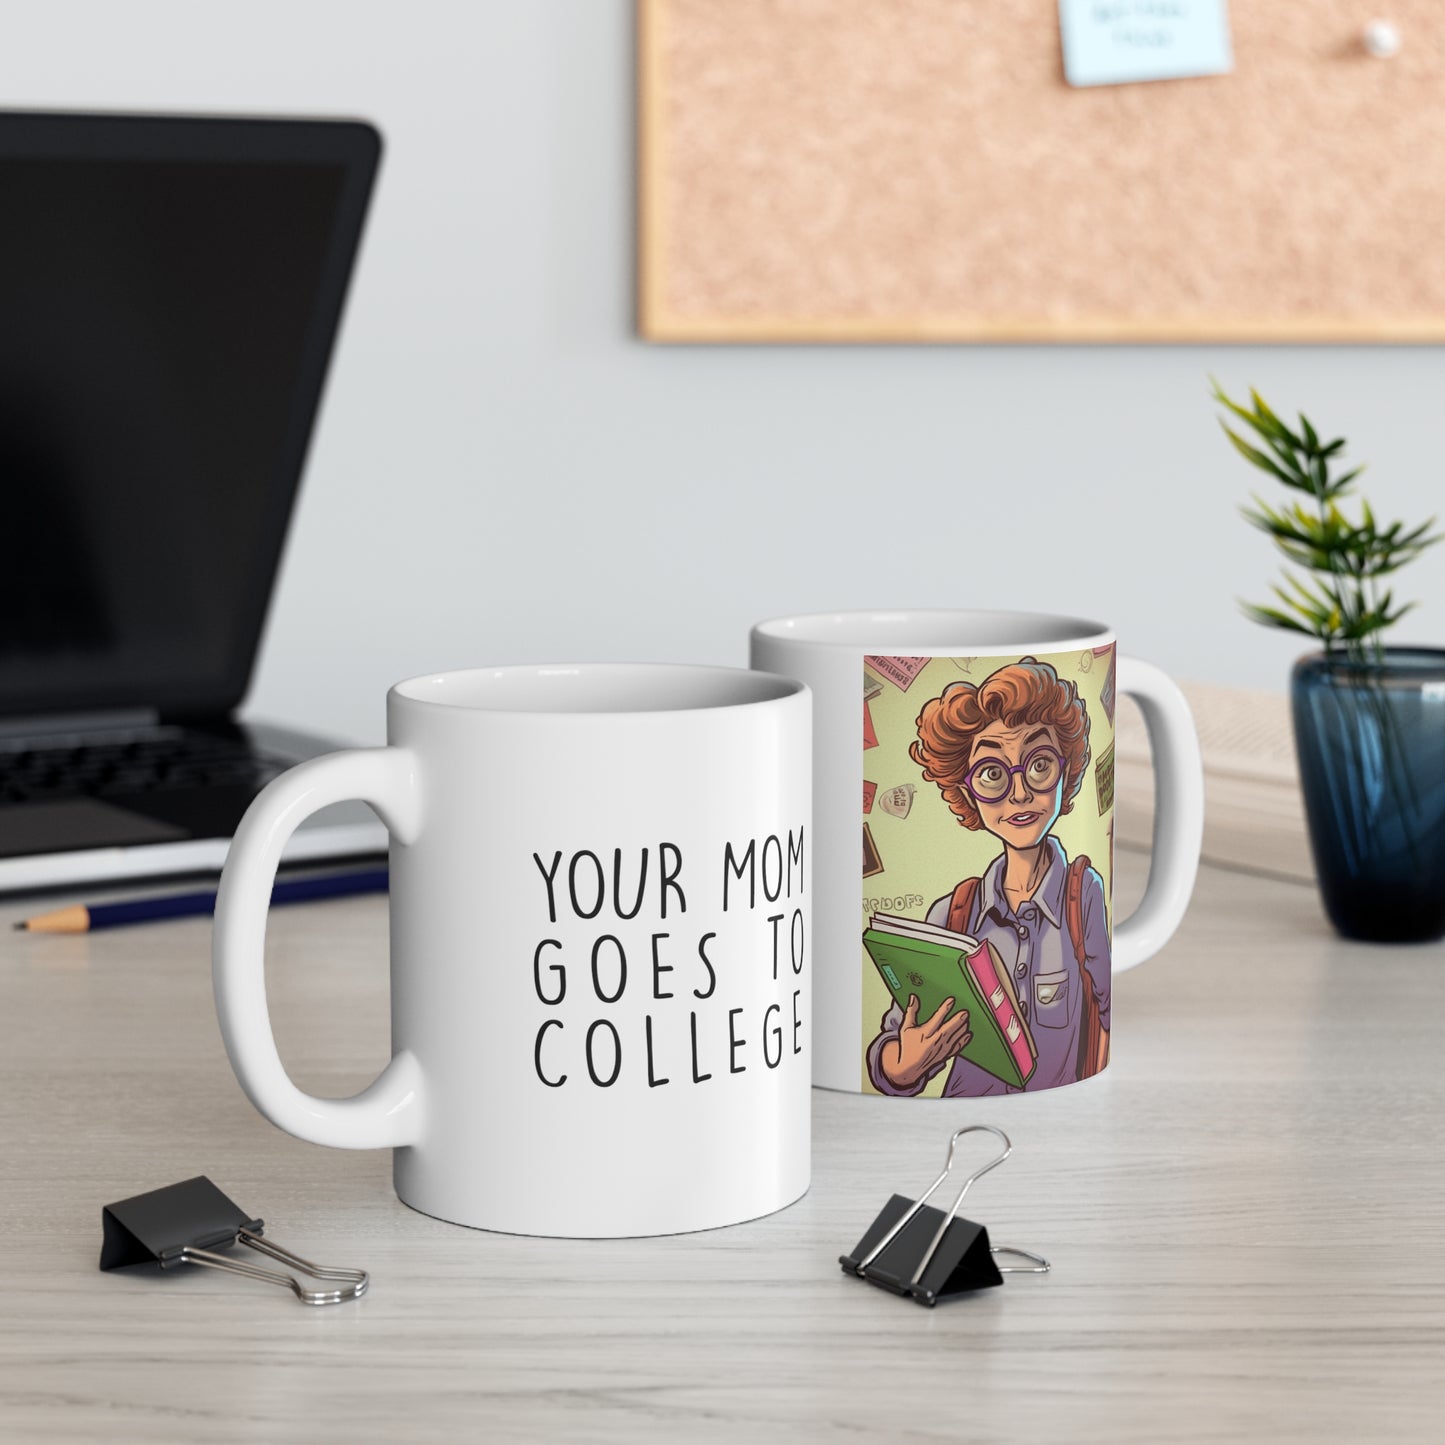 Your Mom Goes To College. 11oz Graphic Print Funny Coffee Mug.